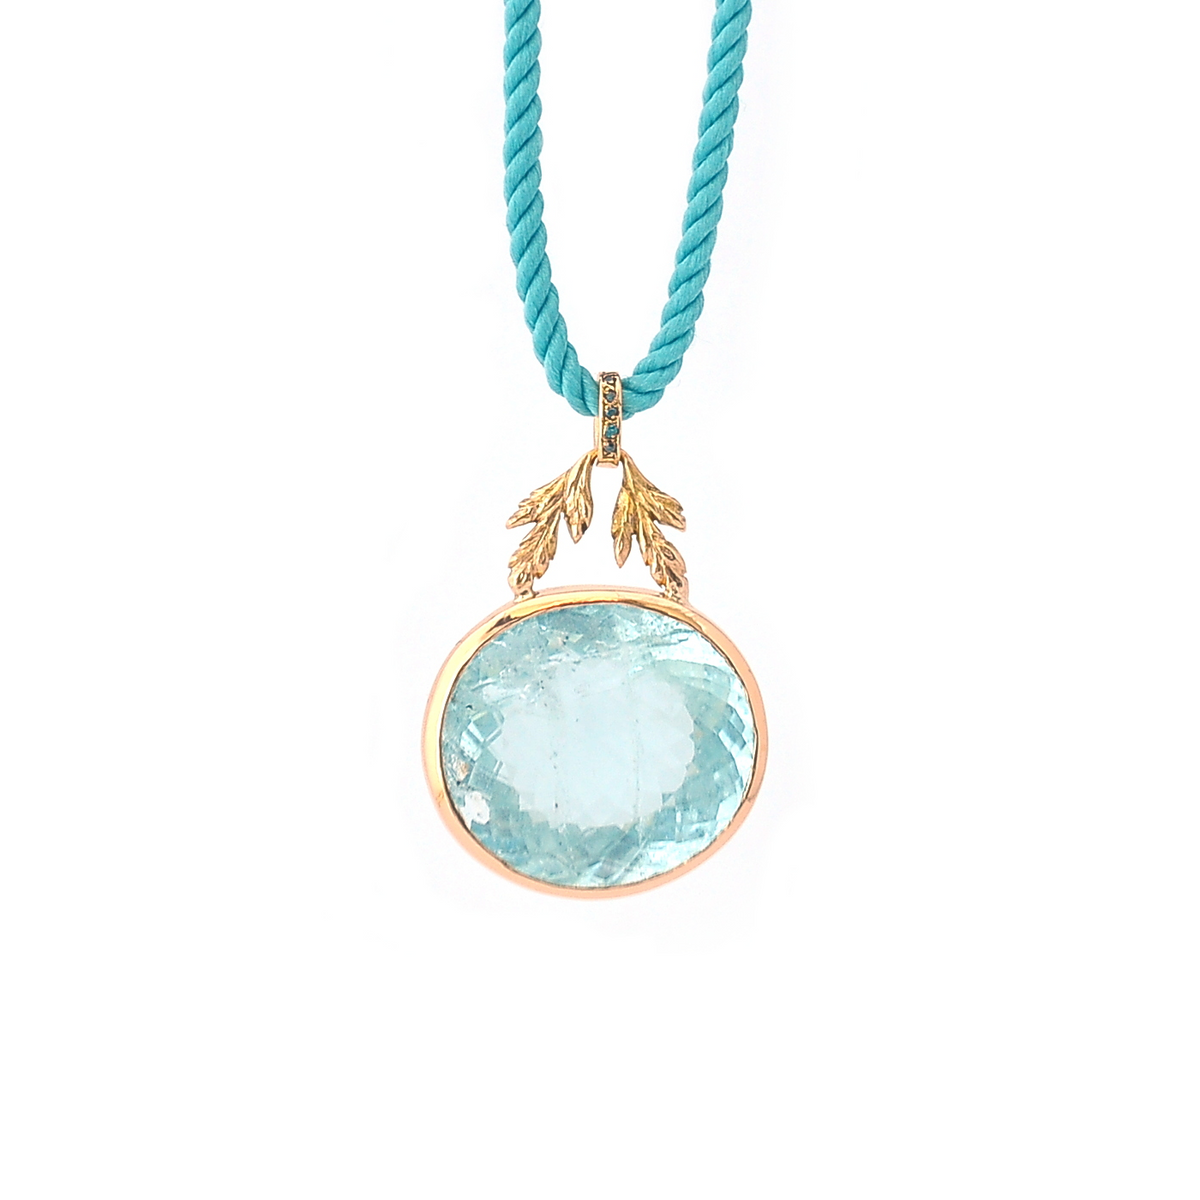 18K gold, hand-crafted pendant with aquamarine, diamonds by Ewa Z. Sleziona Jewellery